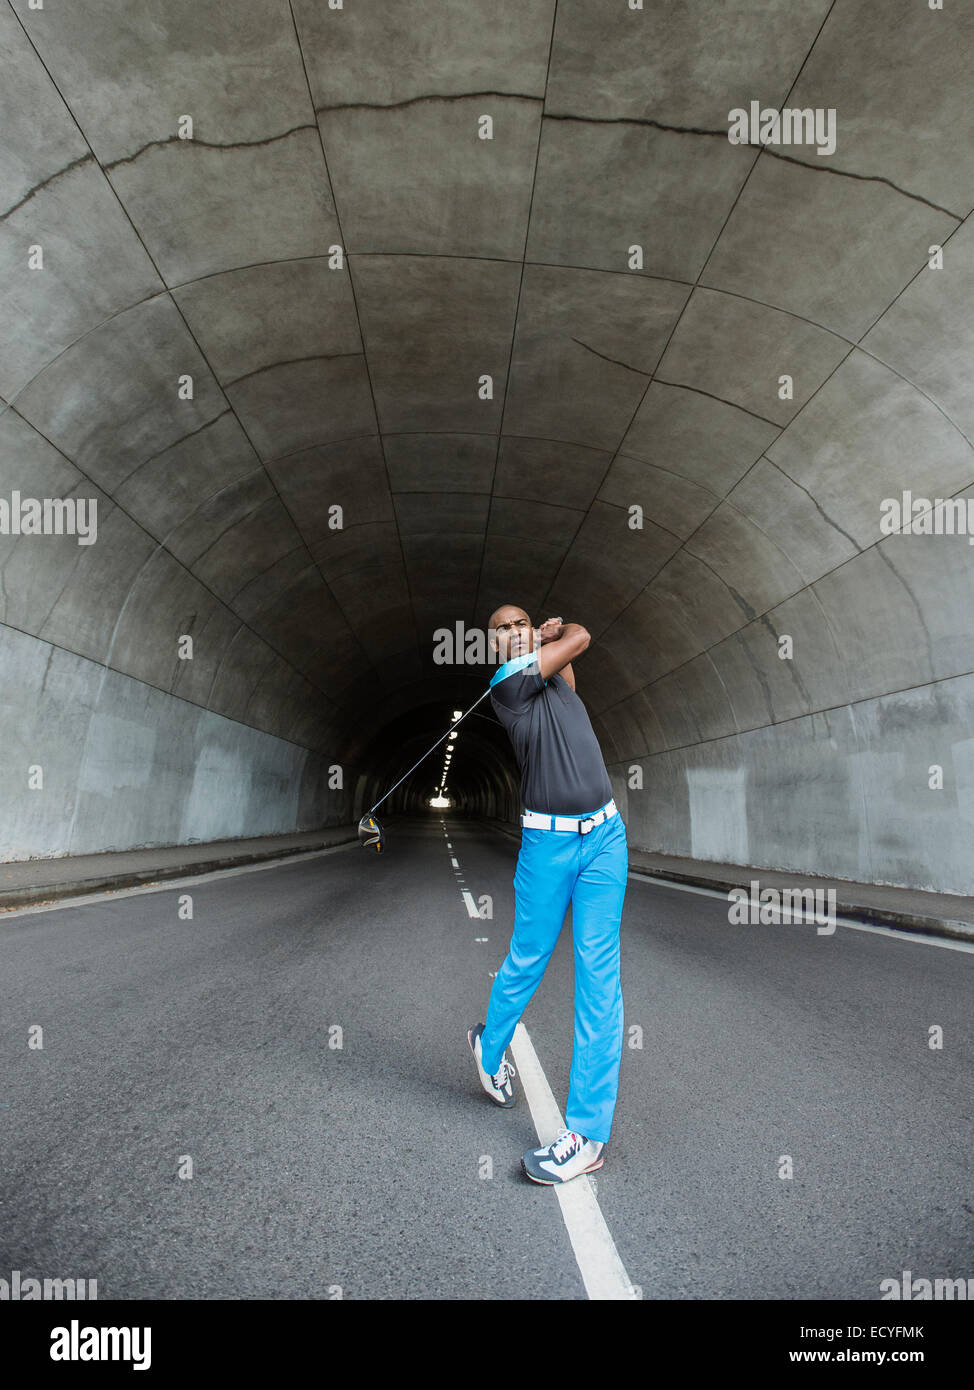 Black man playing golf in urban tunnel Stock Photo